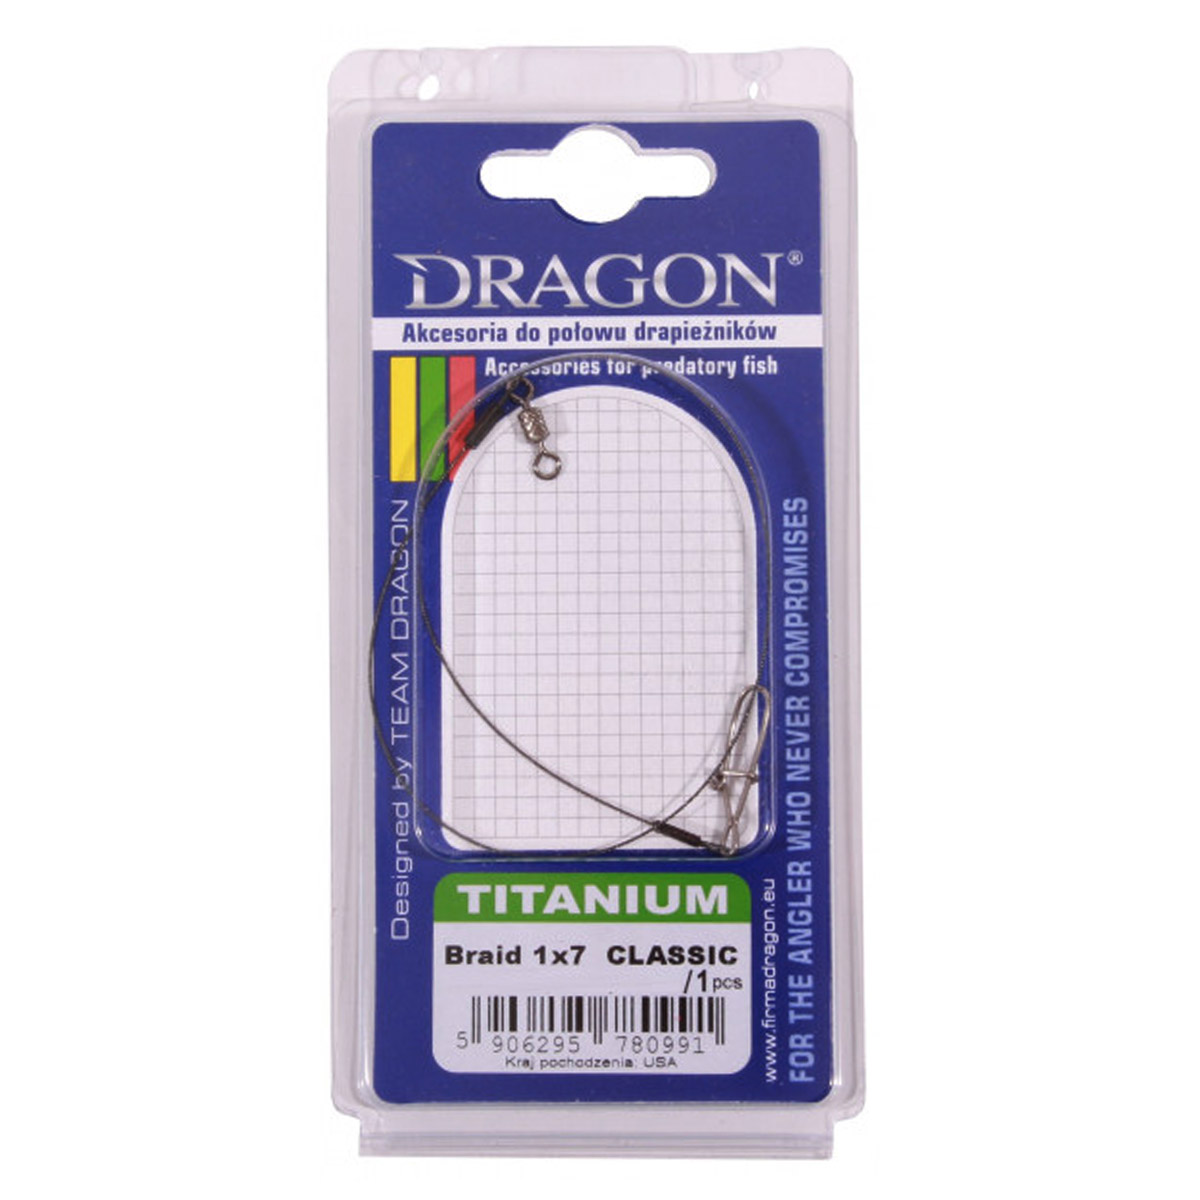 Dragon Titanium Braid 1x7 Leader 30 cm